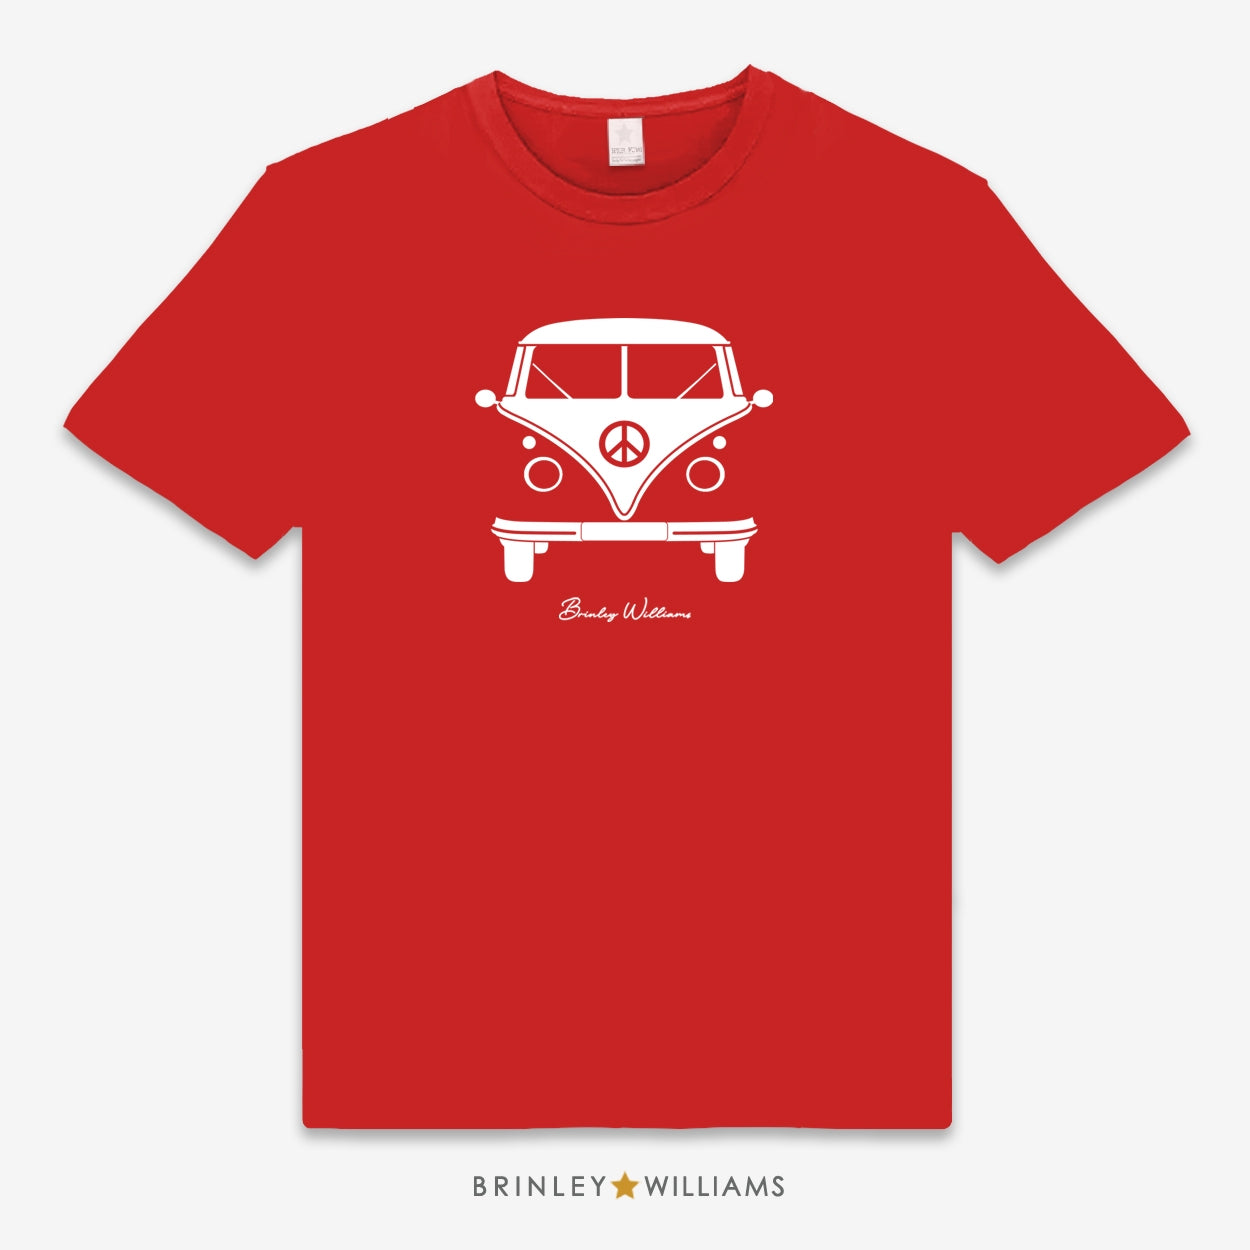 Camper Van Unisex Kids T-shirt - Fire red